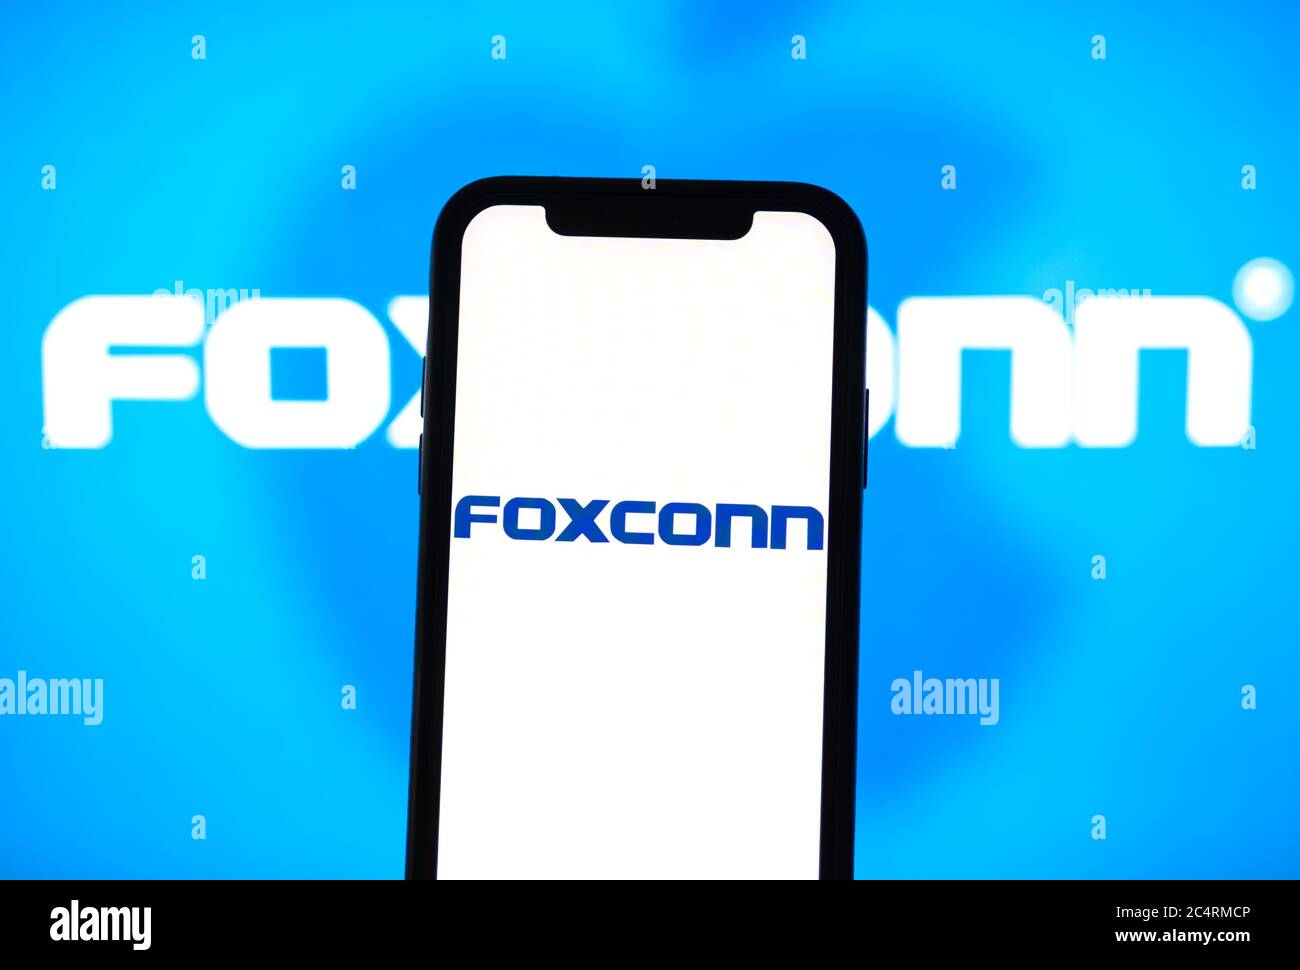 Foxconn logo on the smartphone screen. Stock Photo